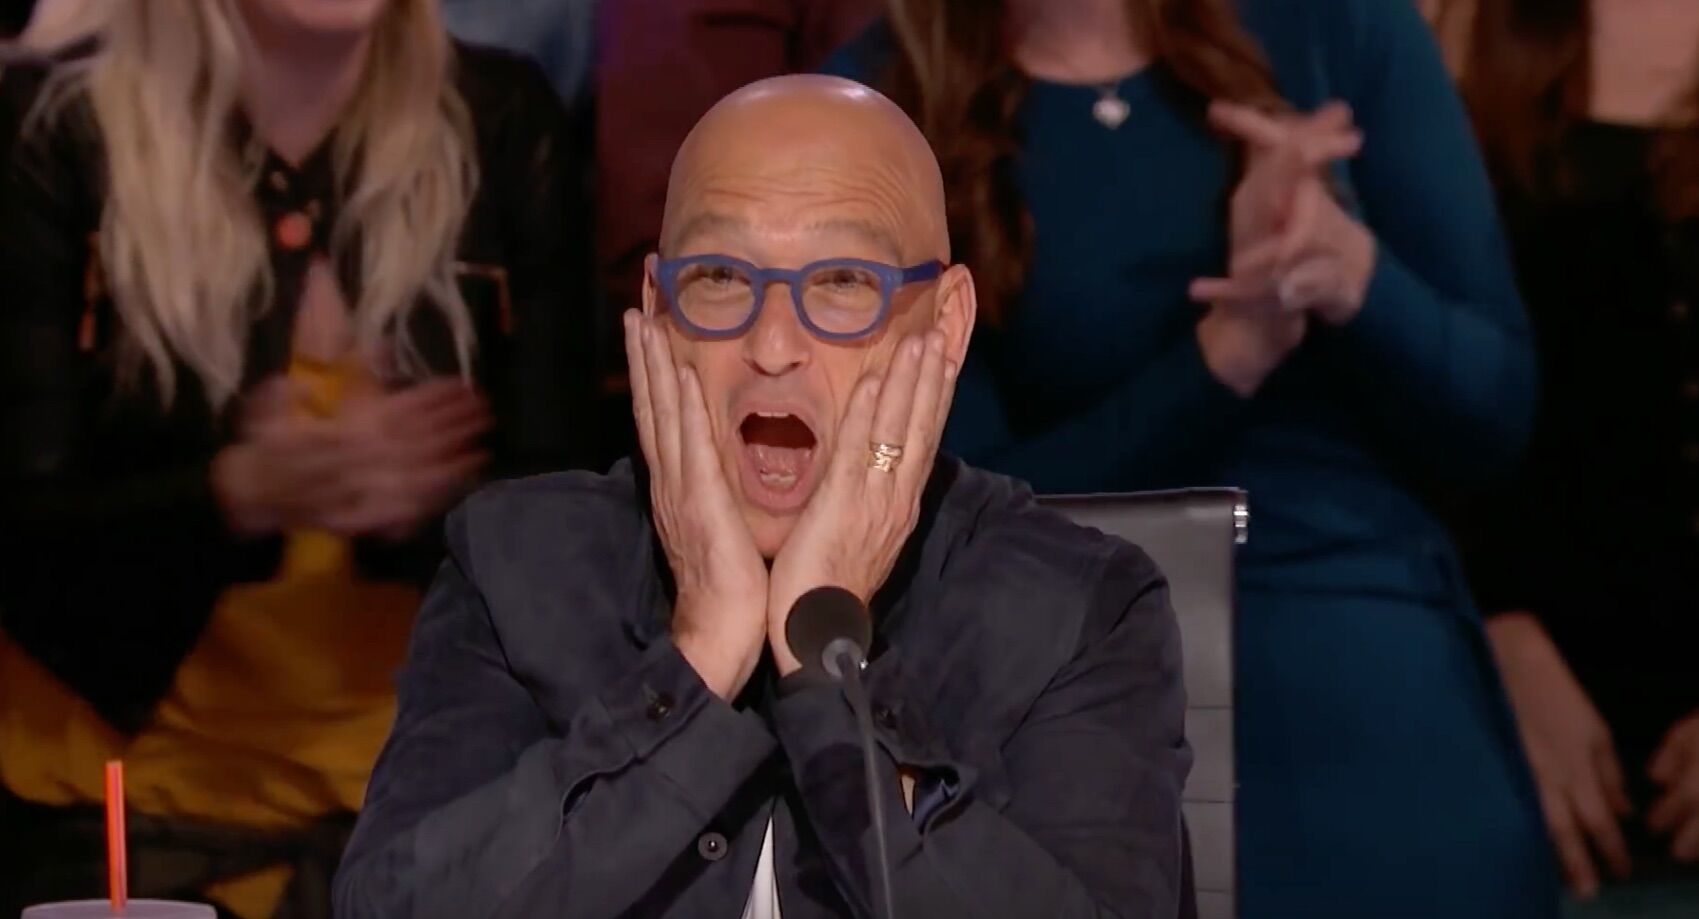 America's Got Talent judge Howie Mandel was blown away by Ben Trigger's audition